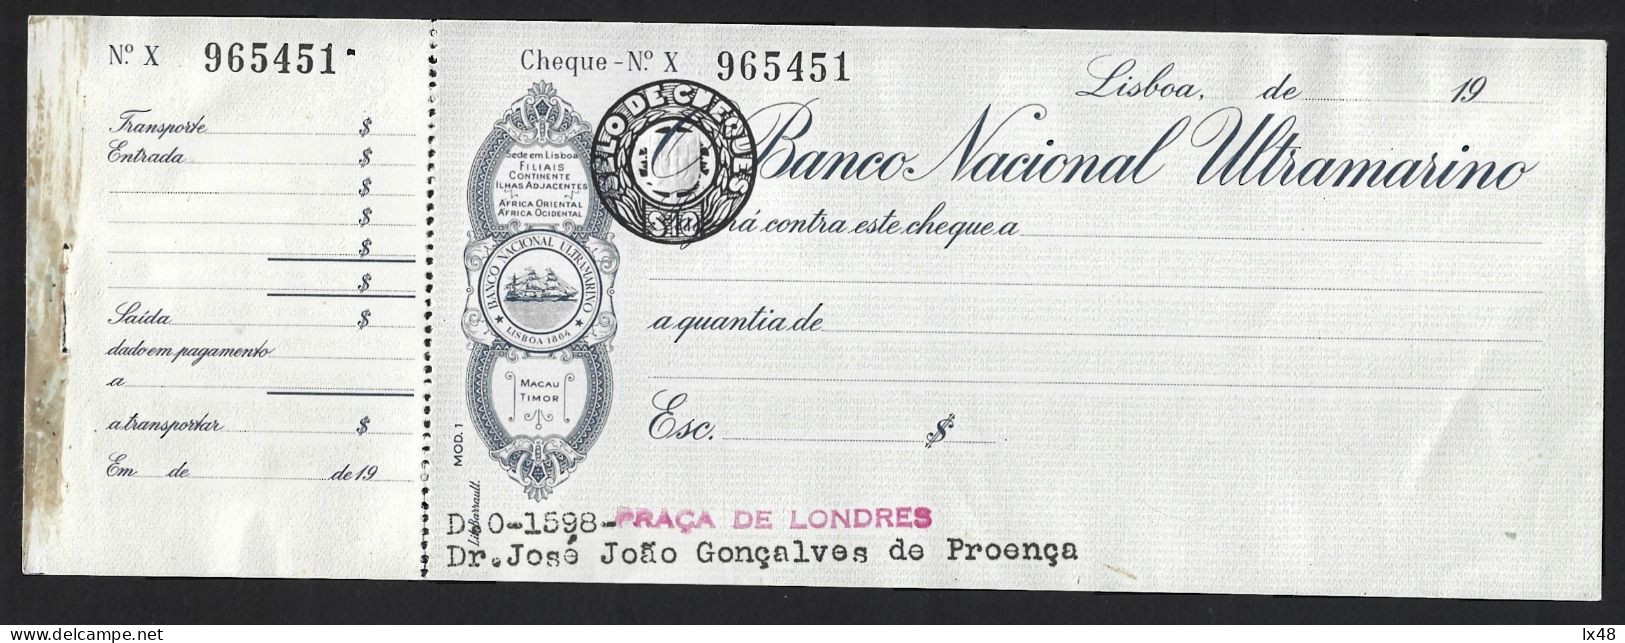 Check From BNU, Banco Nacional Ultramarino, Lisbon. Portugal. Ship. Stamp Check $10. Macao. Timor. Schip. Schiff.Batea - Cheques & Traveler's Cheques